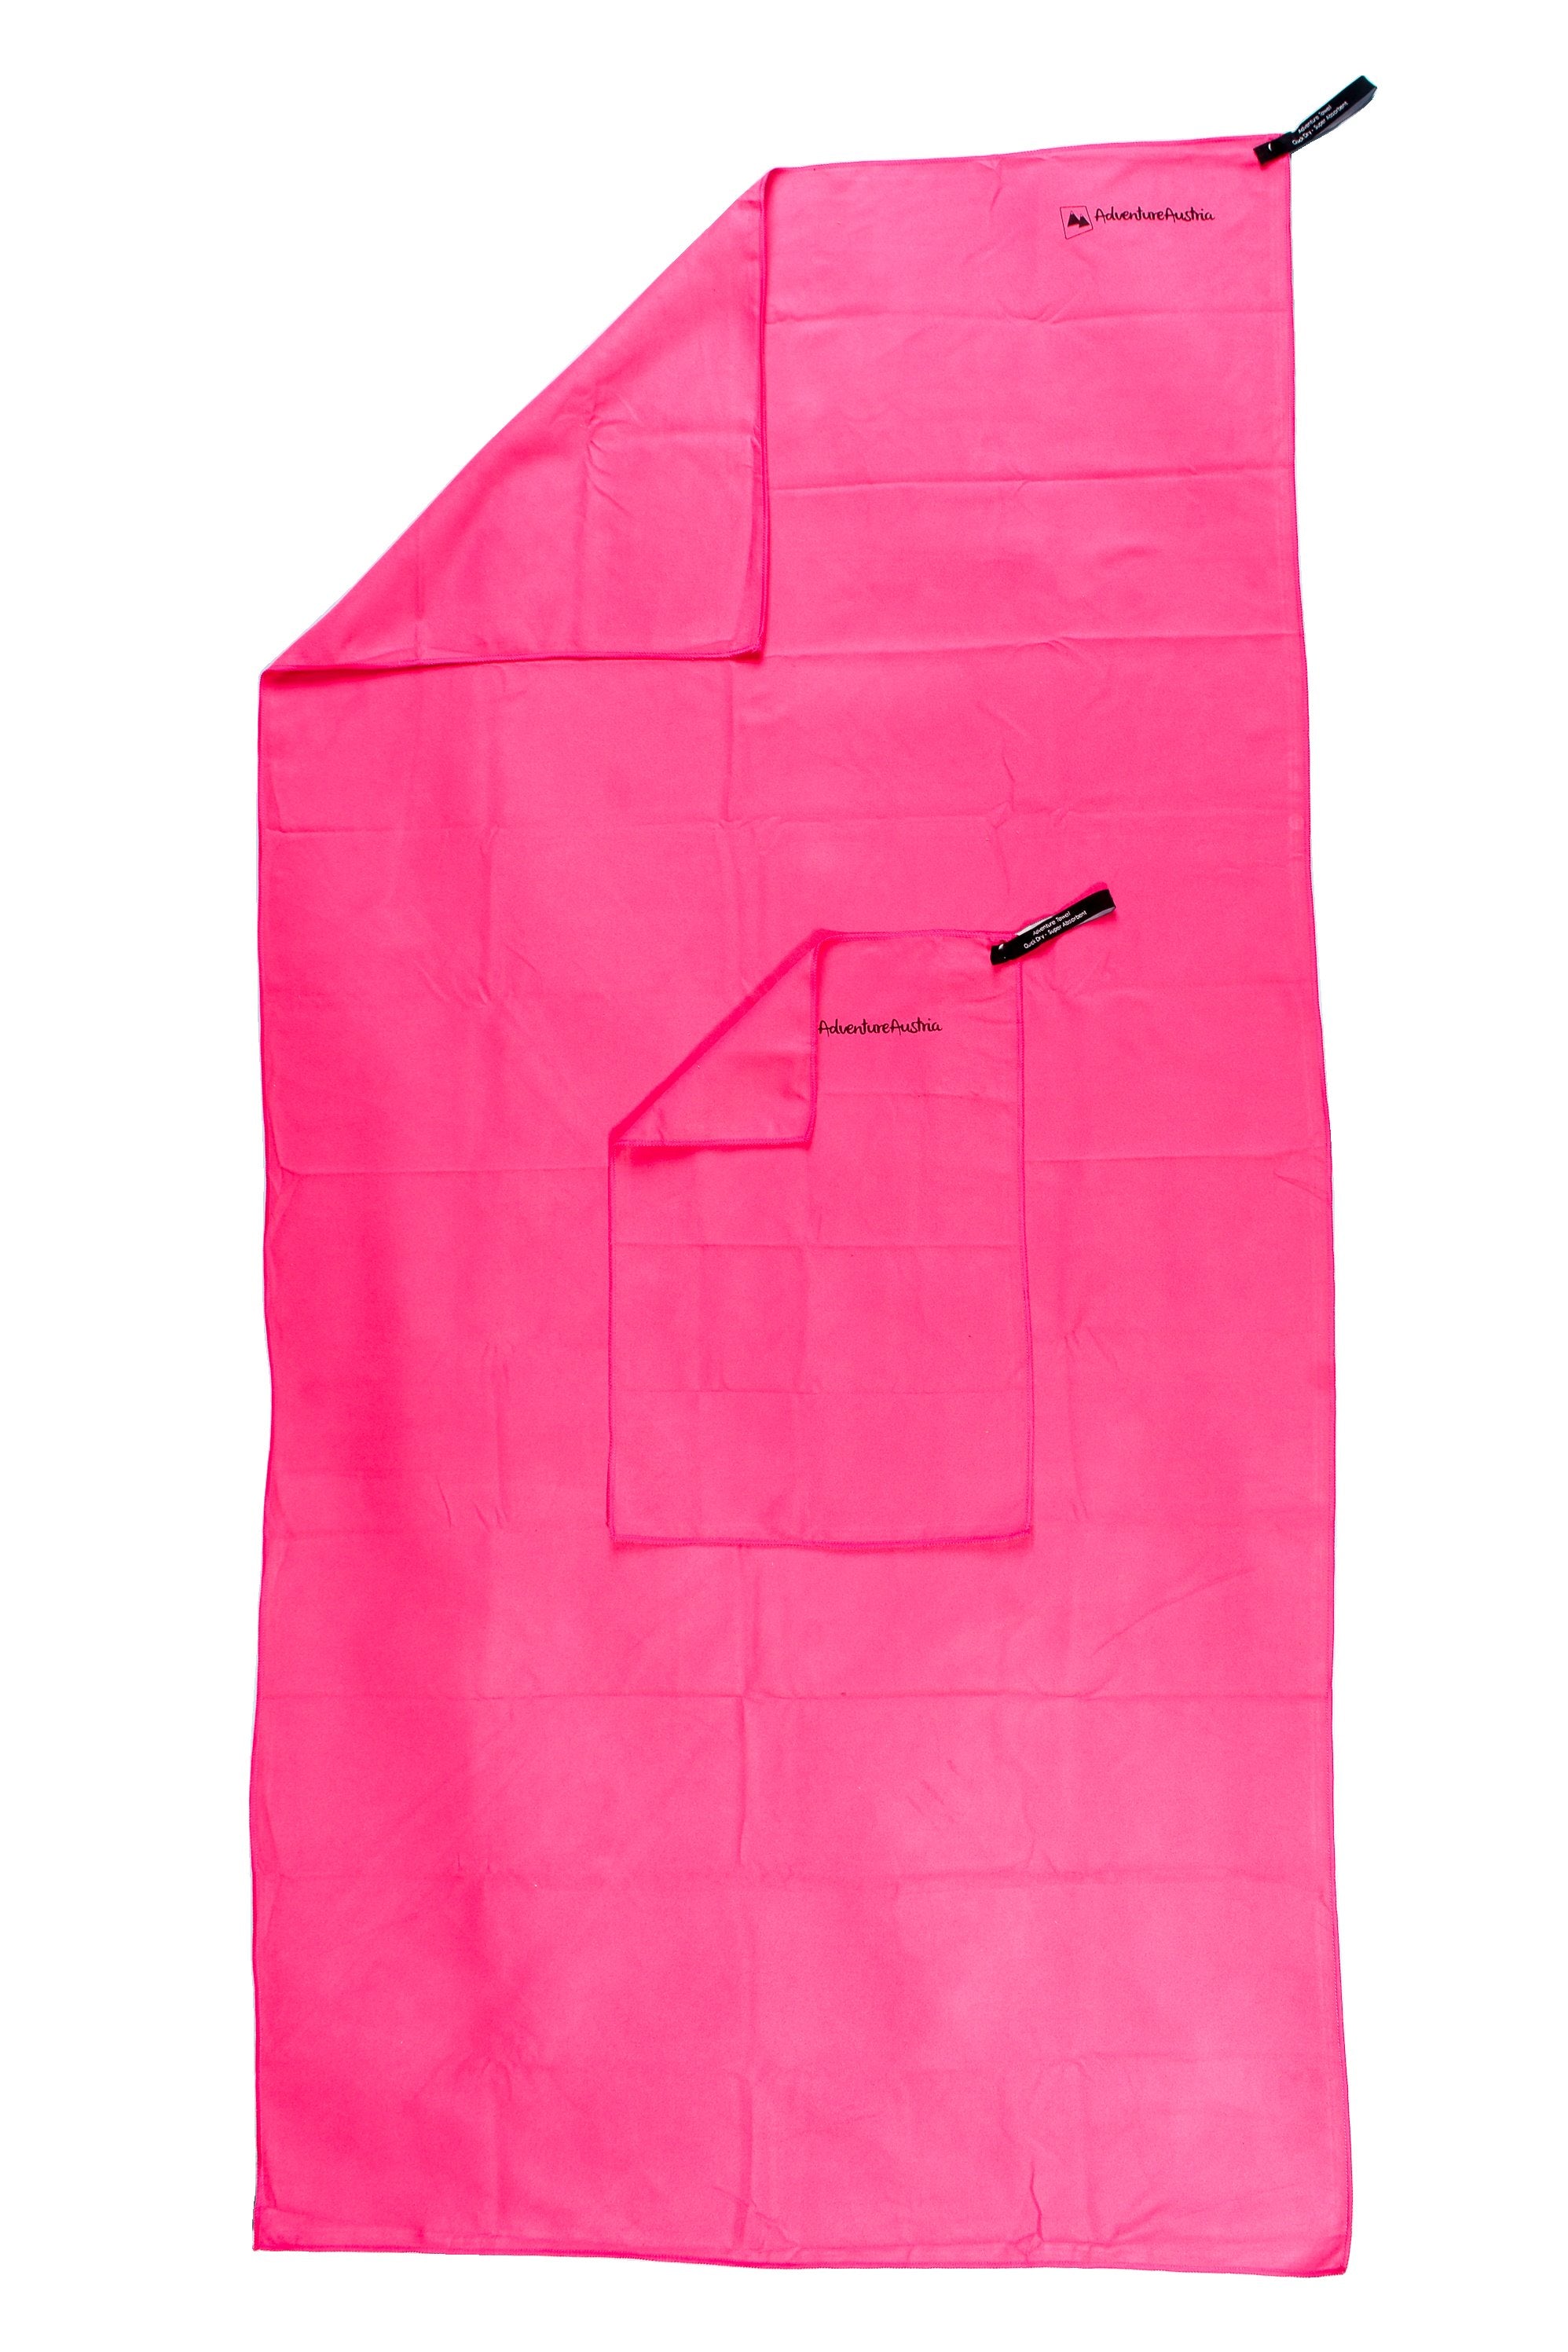 pink microfibre towel set